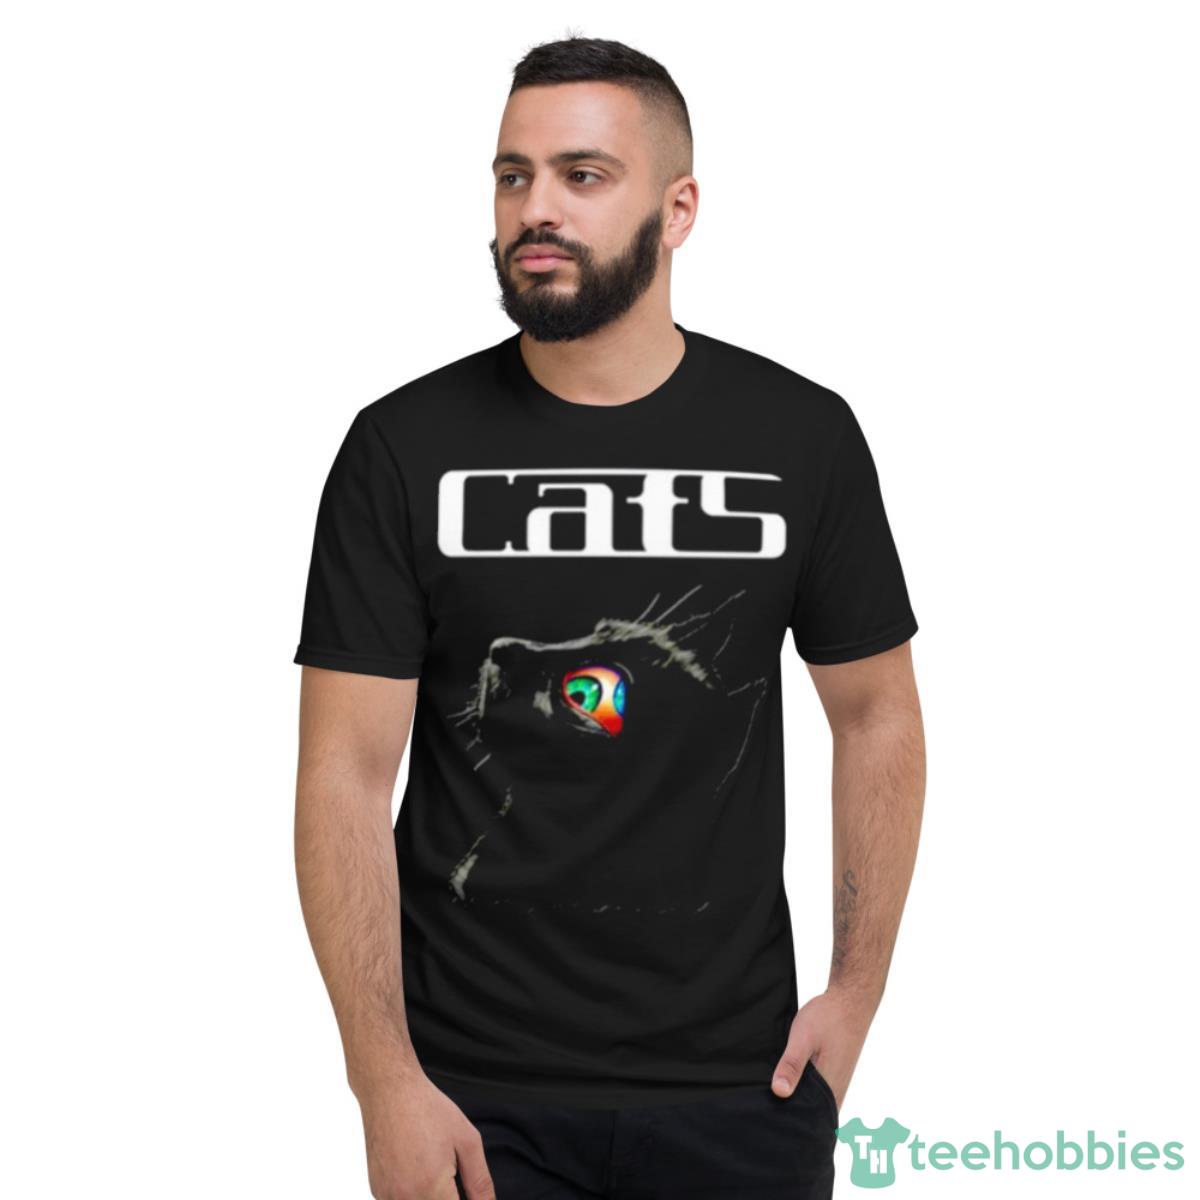 Cats Darklord Pug Shirt - Short Sleeve T-Shirt